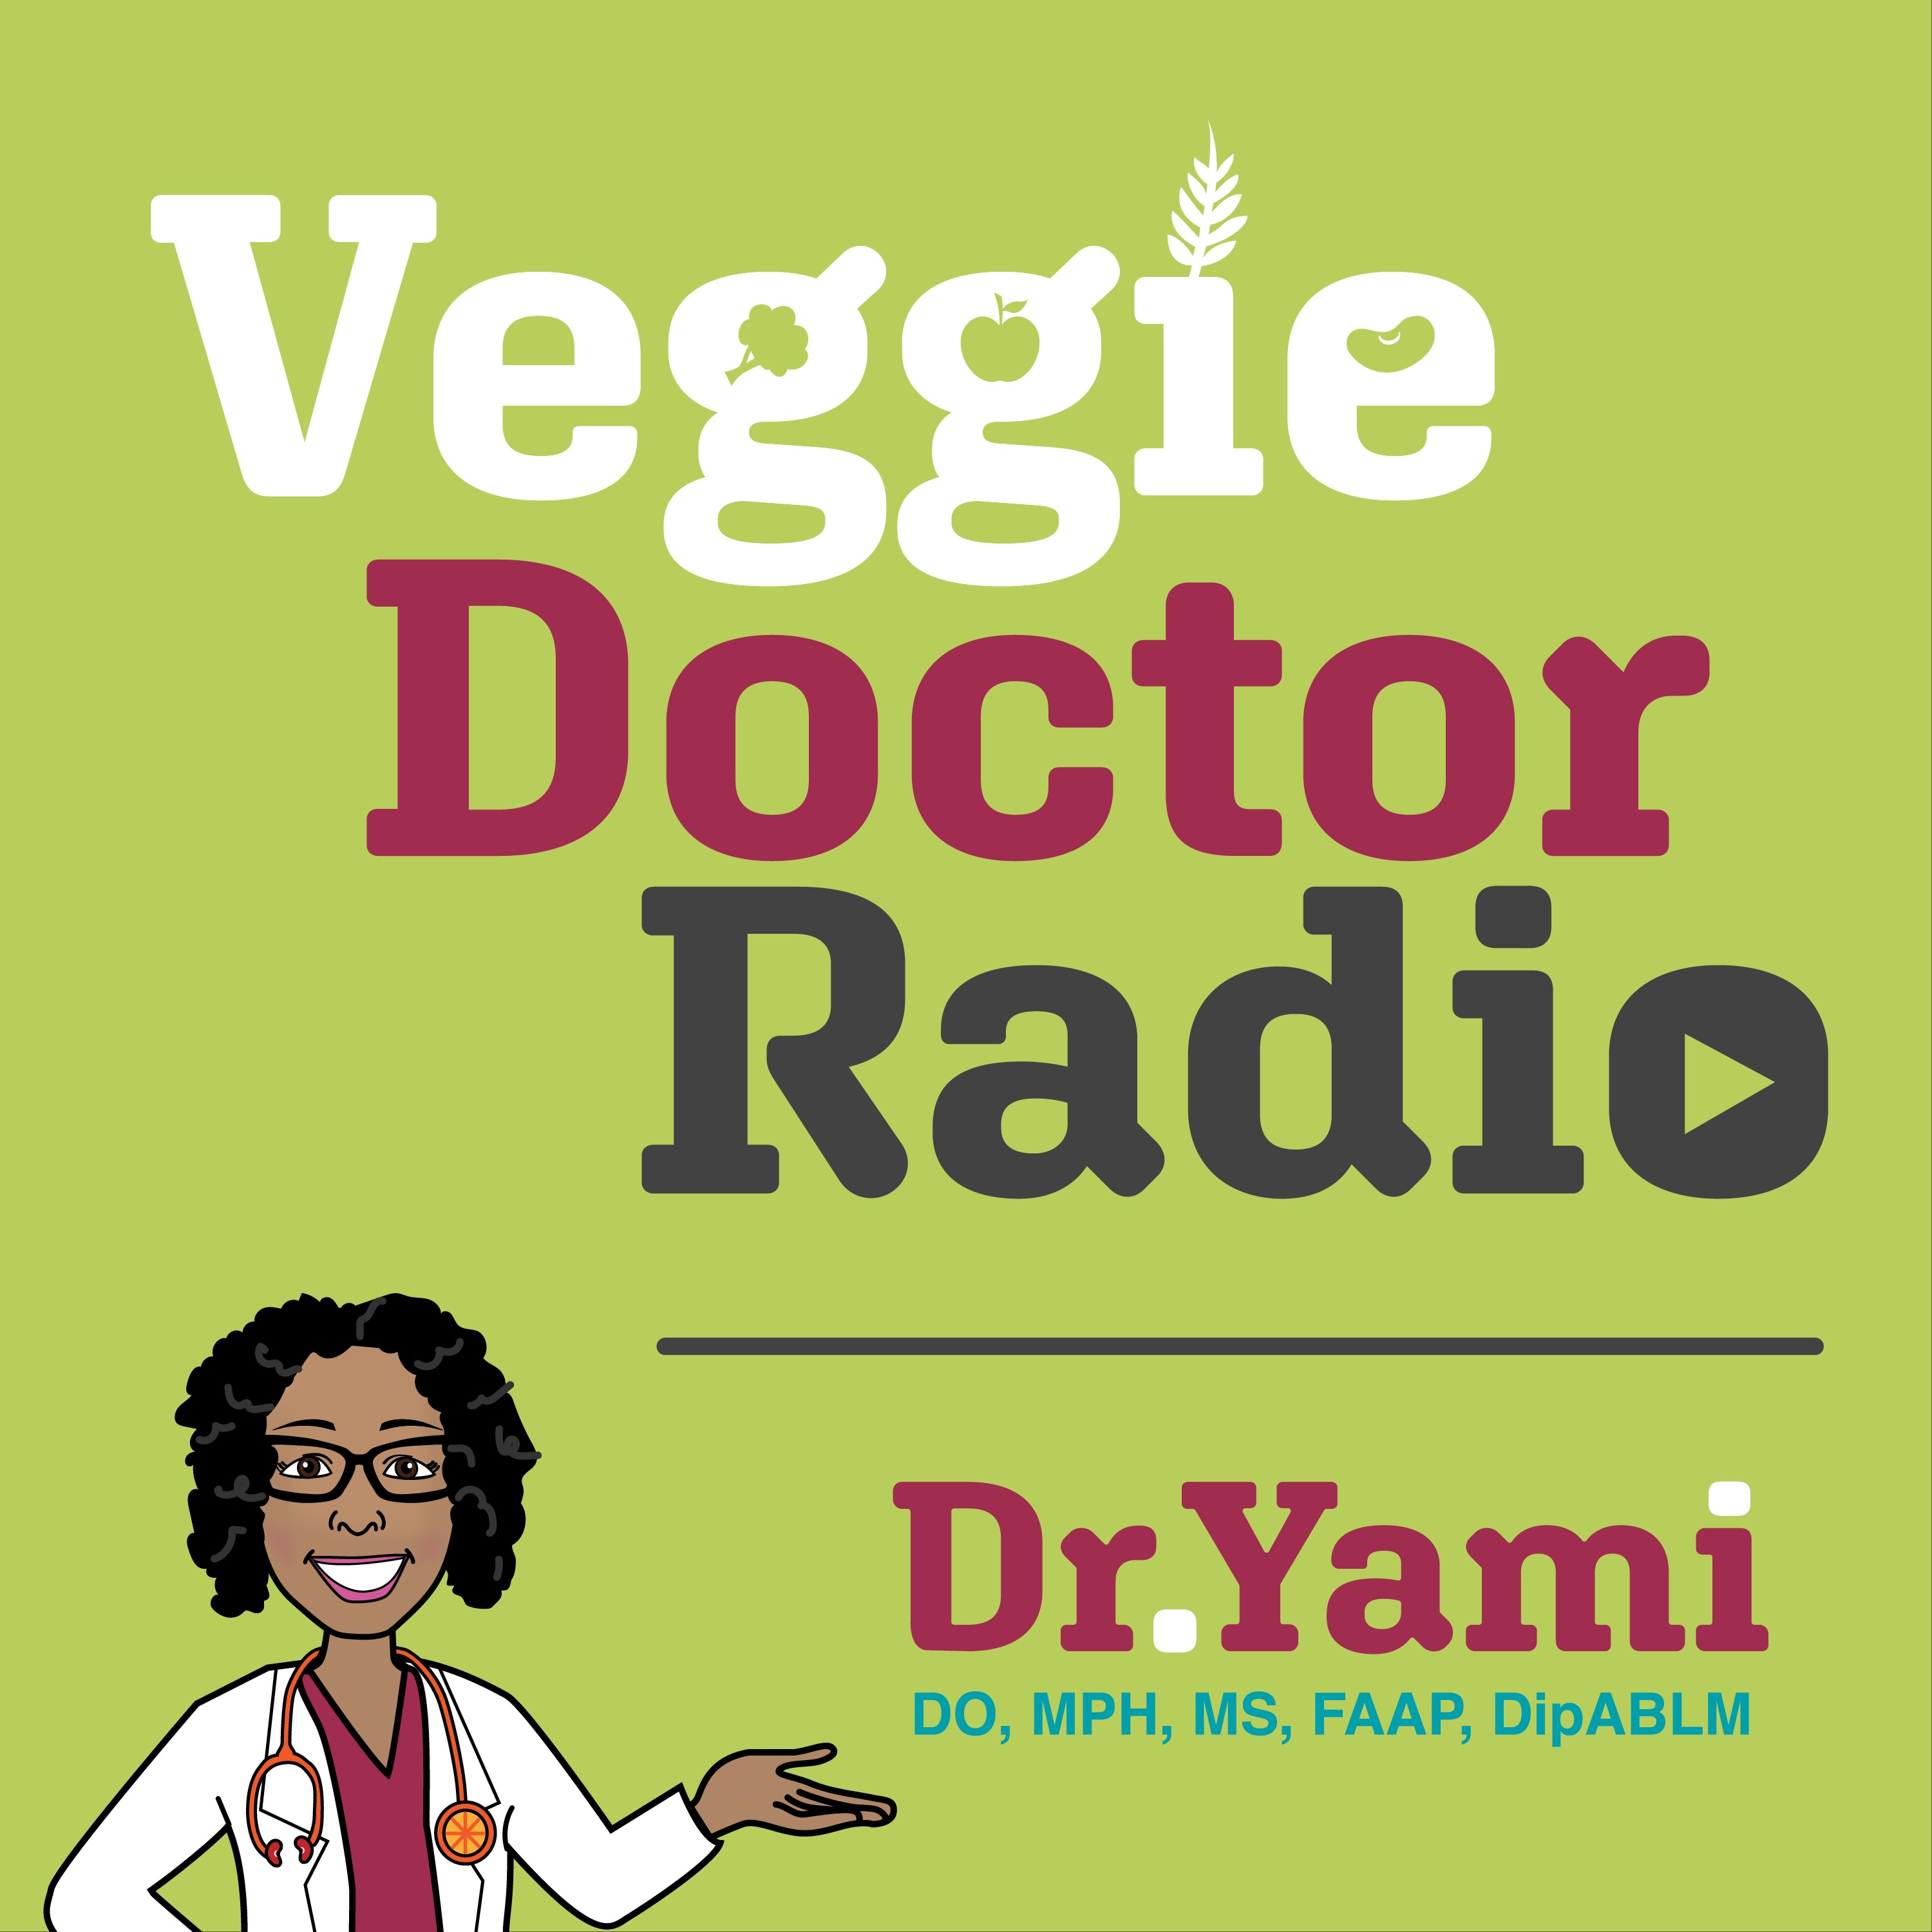 160: Walking for Health and Community with Dr. David Sabgir (Veggie Doctor Radio)